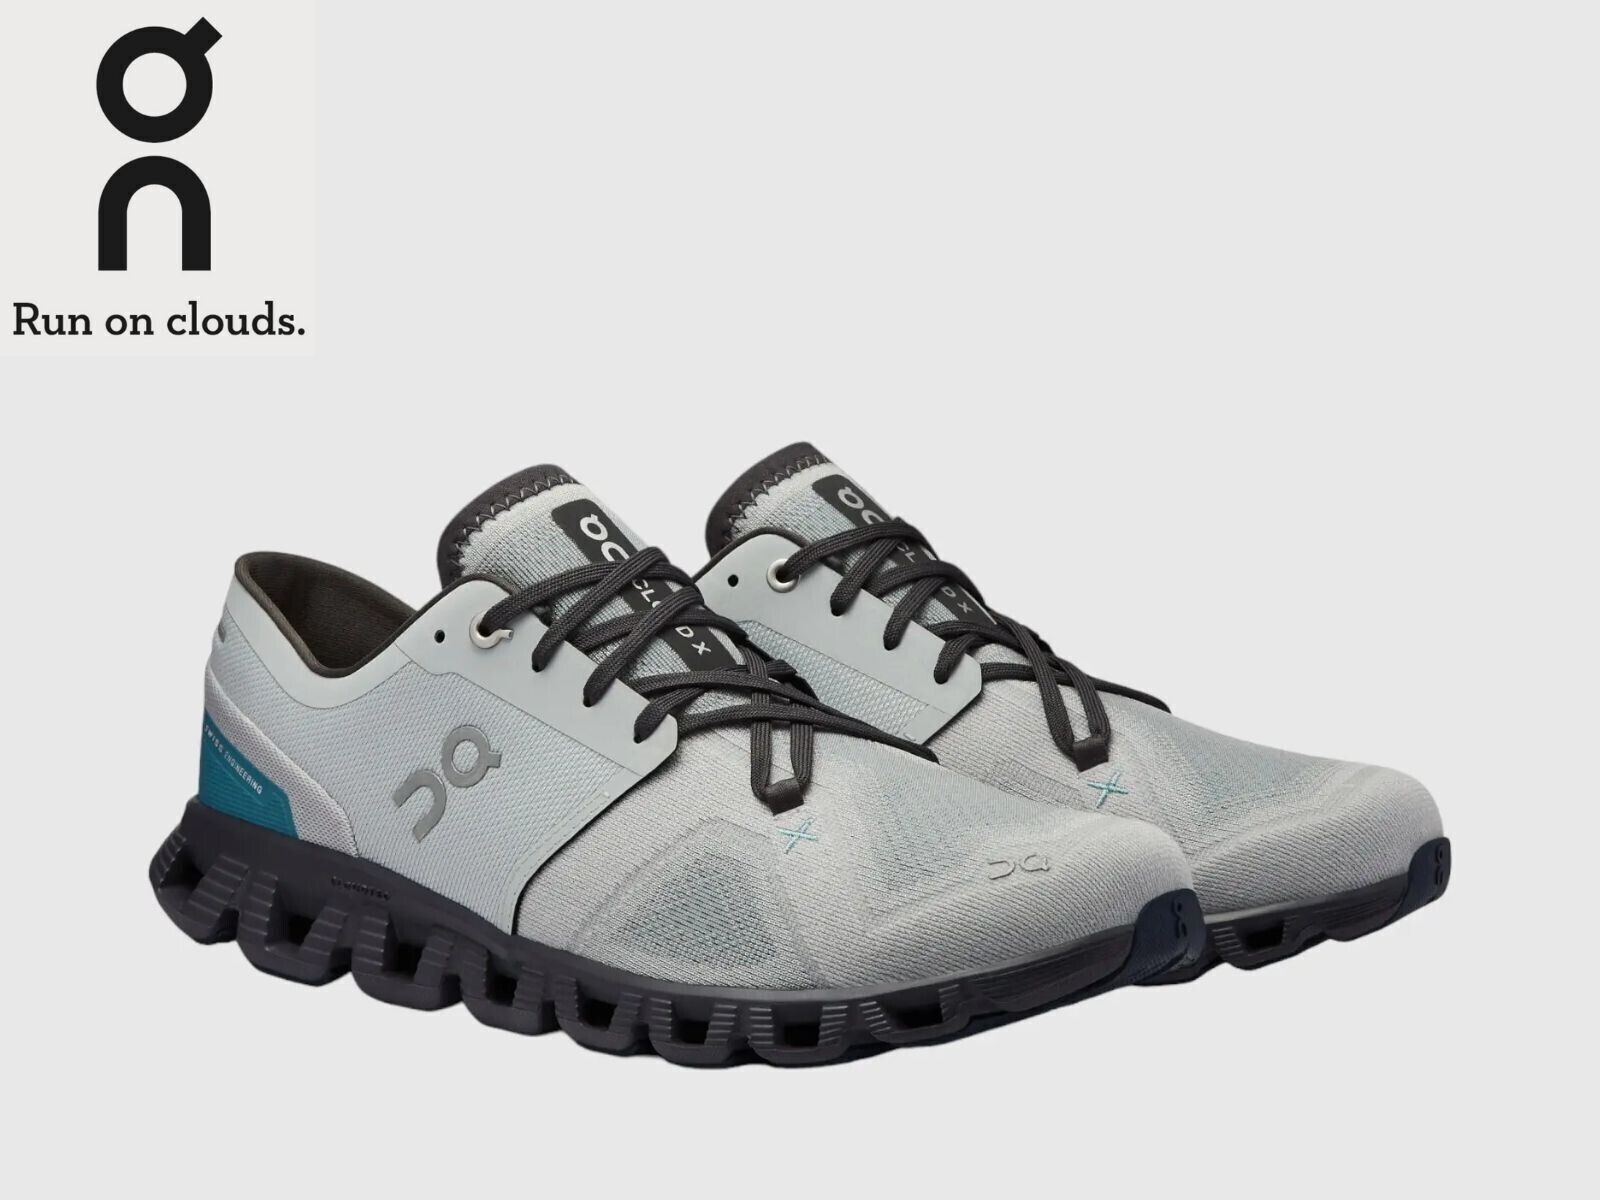 SALE OFF ON CLOUD X 3 Men's Running Shoes Color Glacier | Iron US Size -F